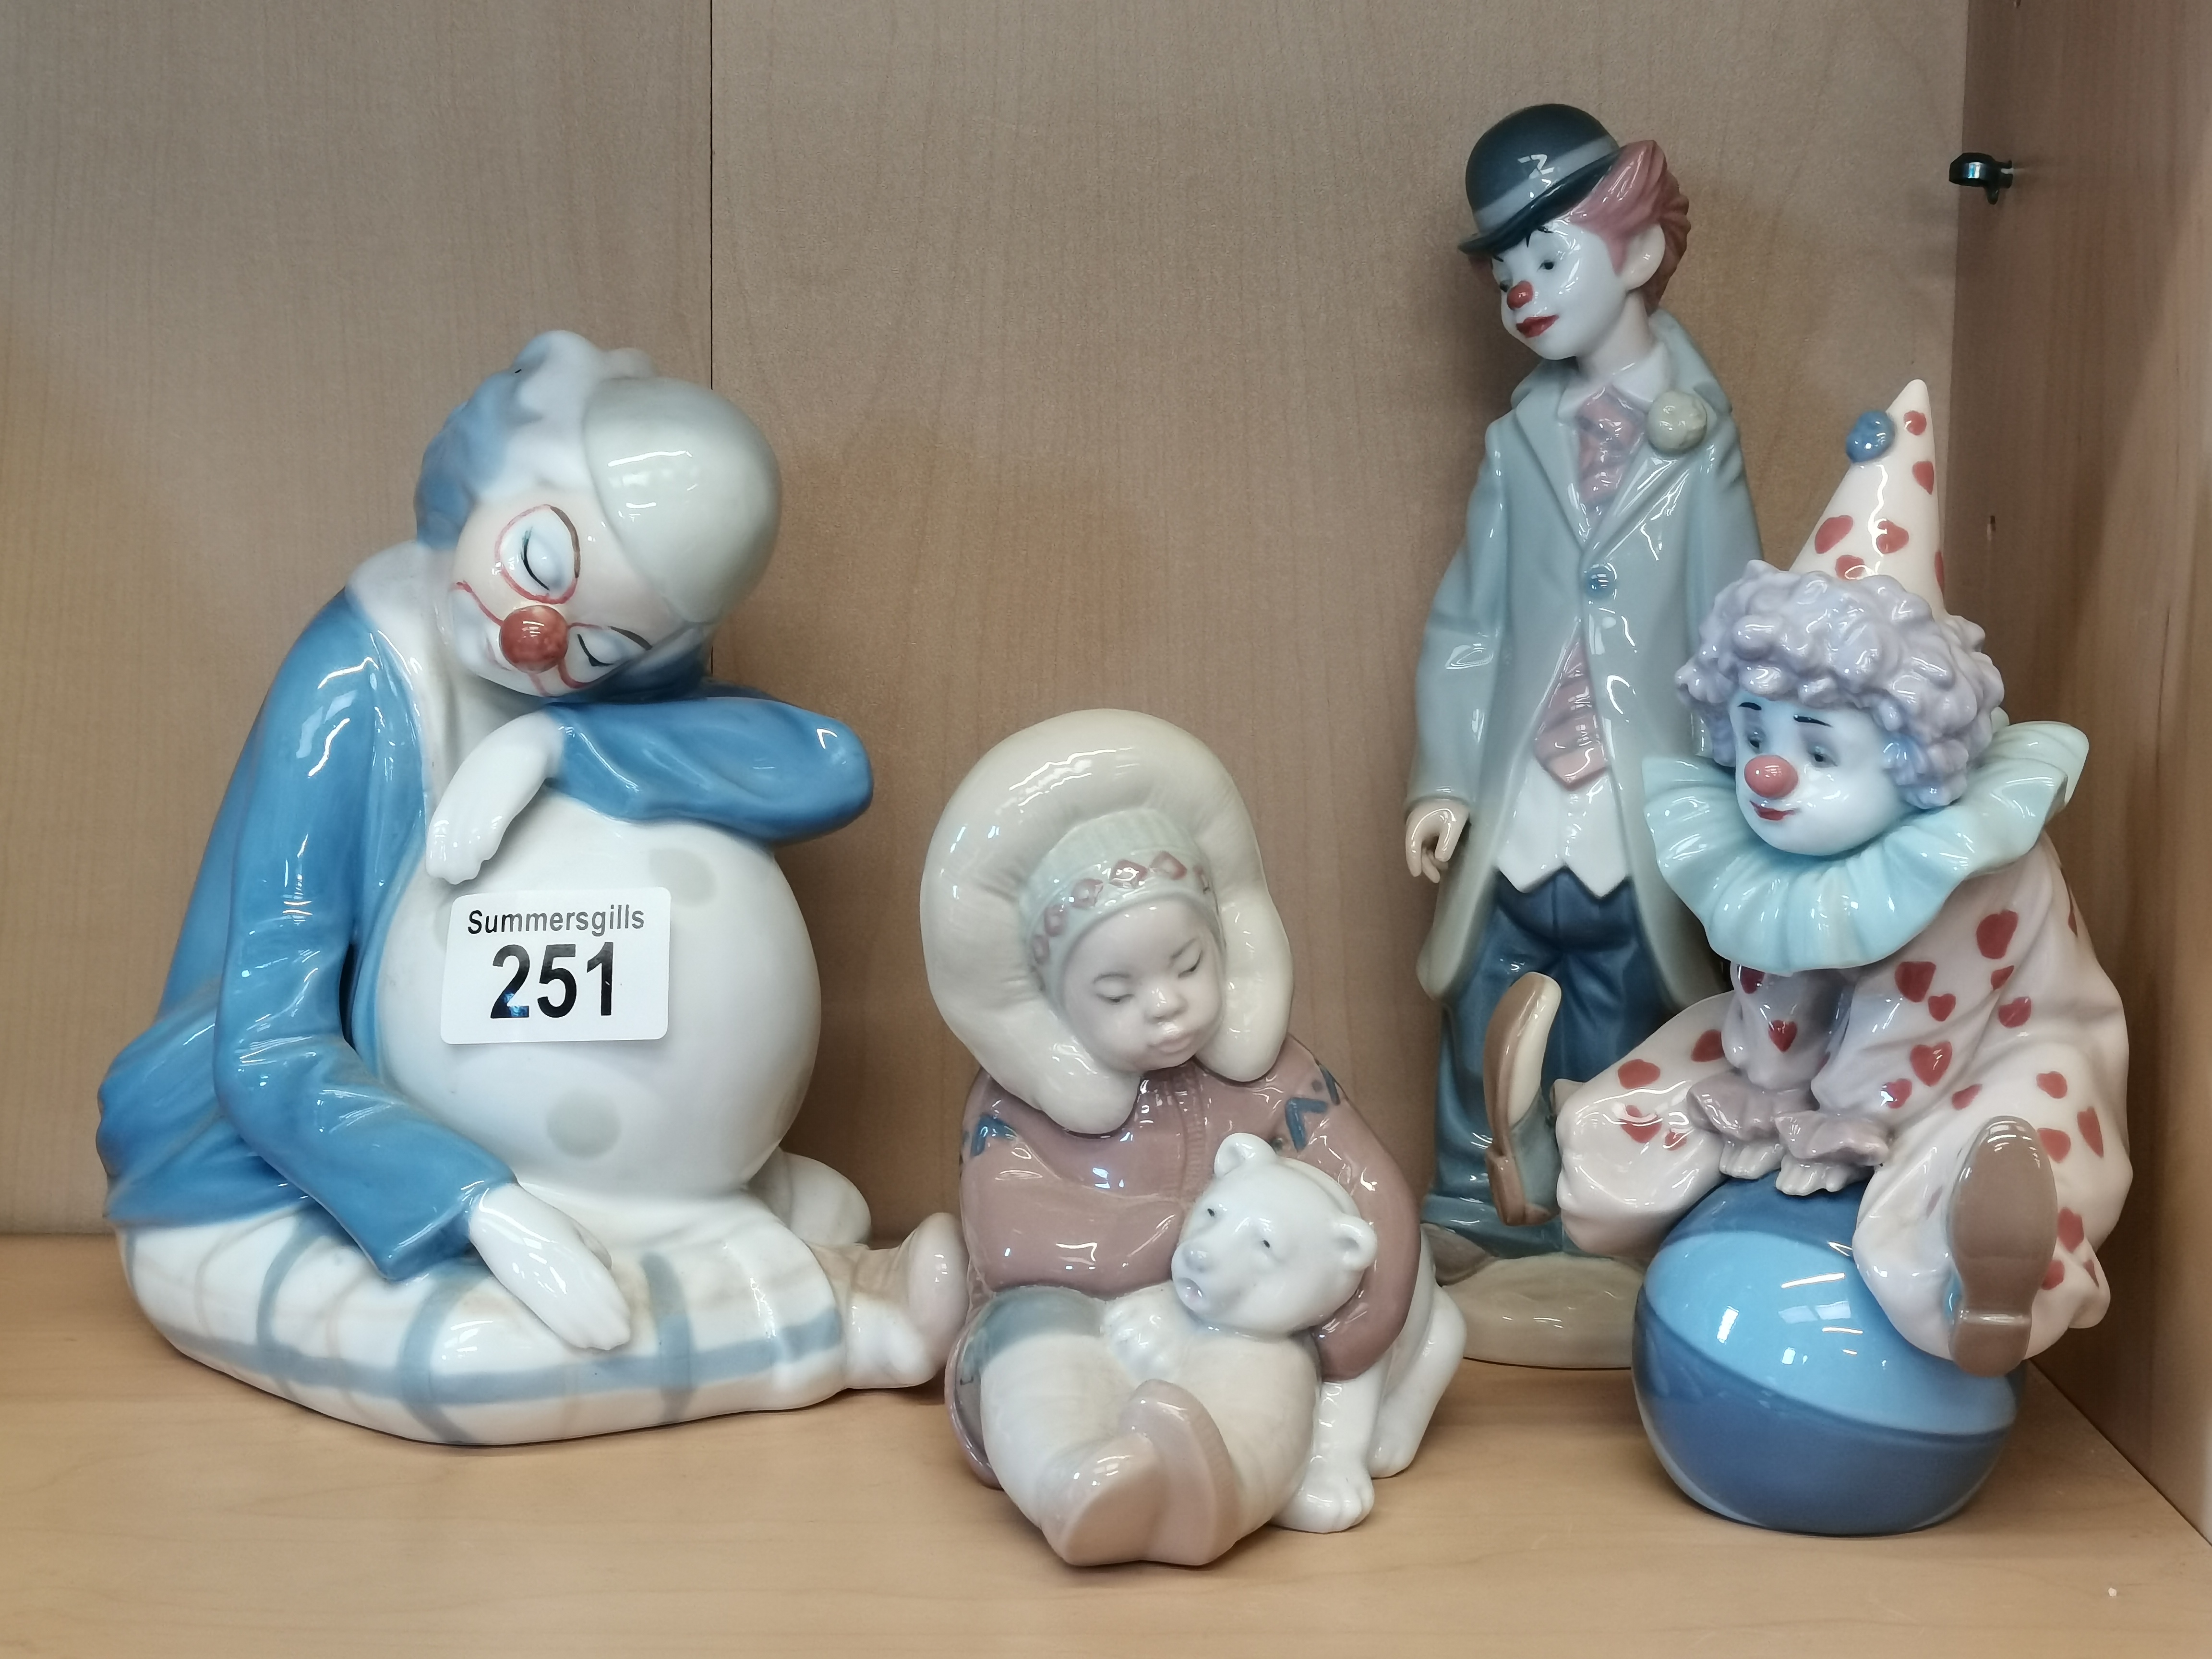 x3 Lladro figurines plus a Cascade Clown with ball